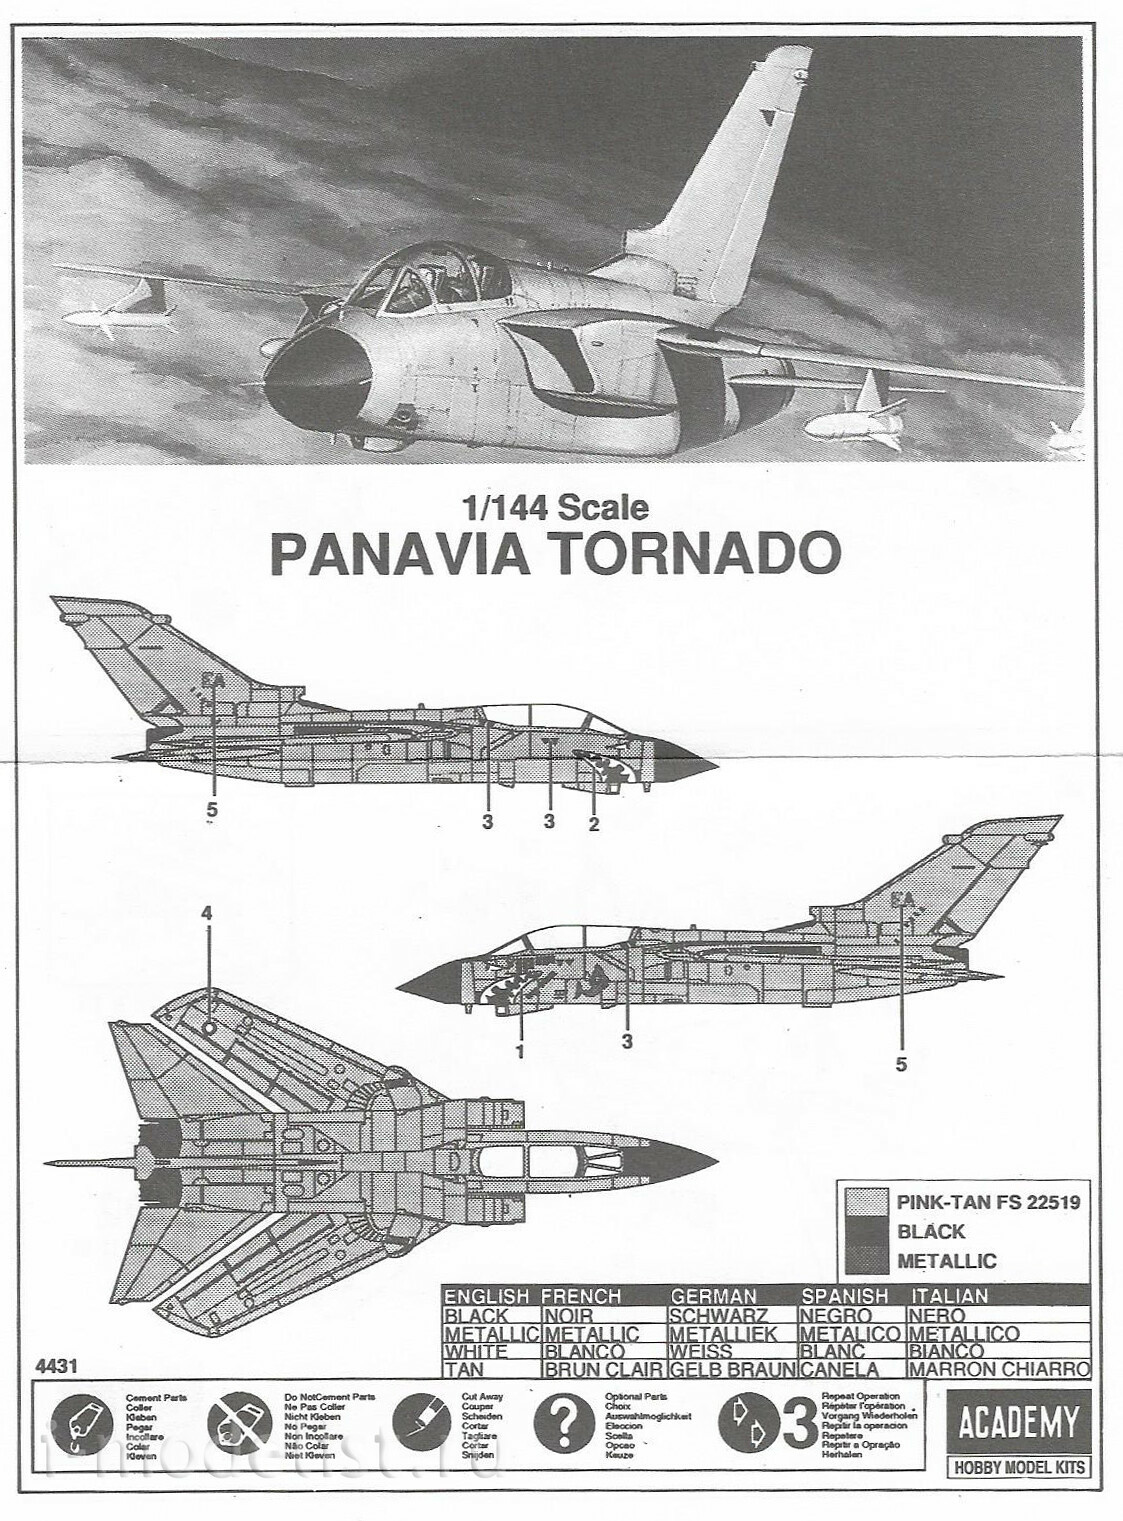 12607 Academy 1/144 Panavia Tornado Fighter-bomber